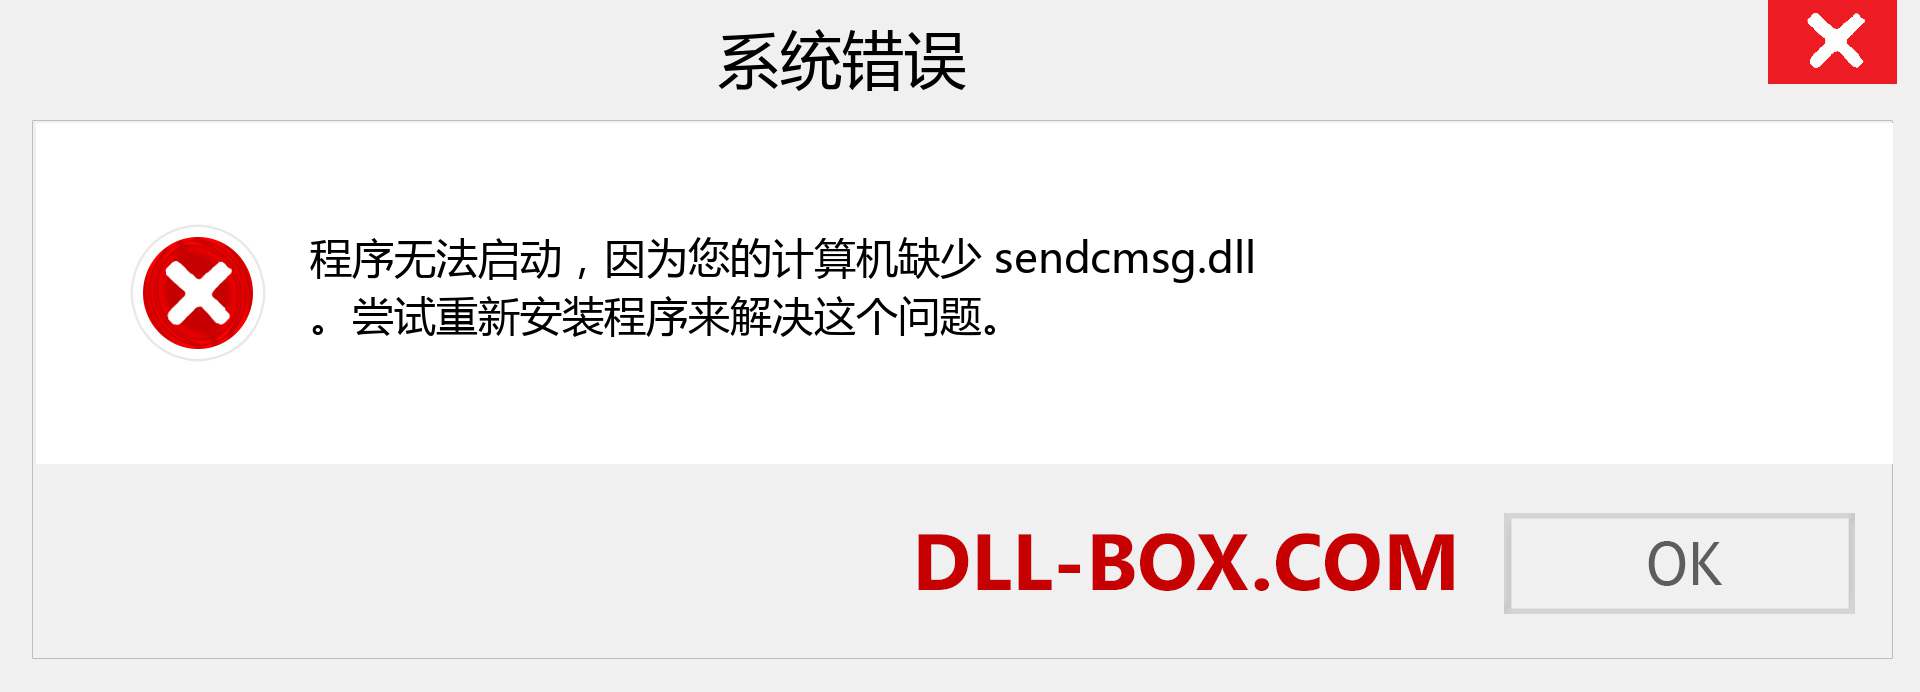 sendcmsg.dll 文件丢失？。 适用于 Windows 7、8、10 的下载 - 修复 Windows、照片、图像上的 sendcmsg dll 丢失错误